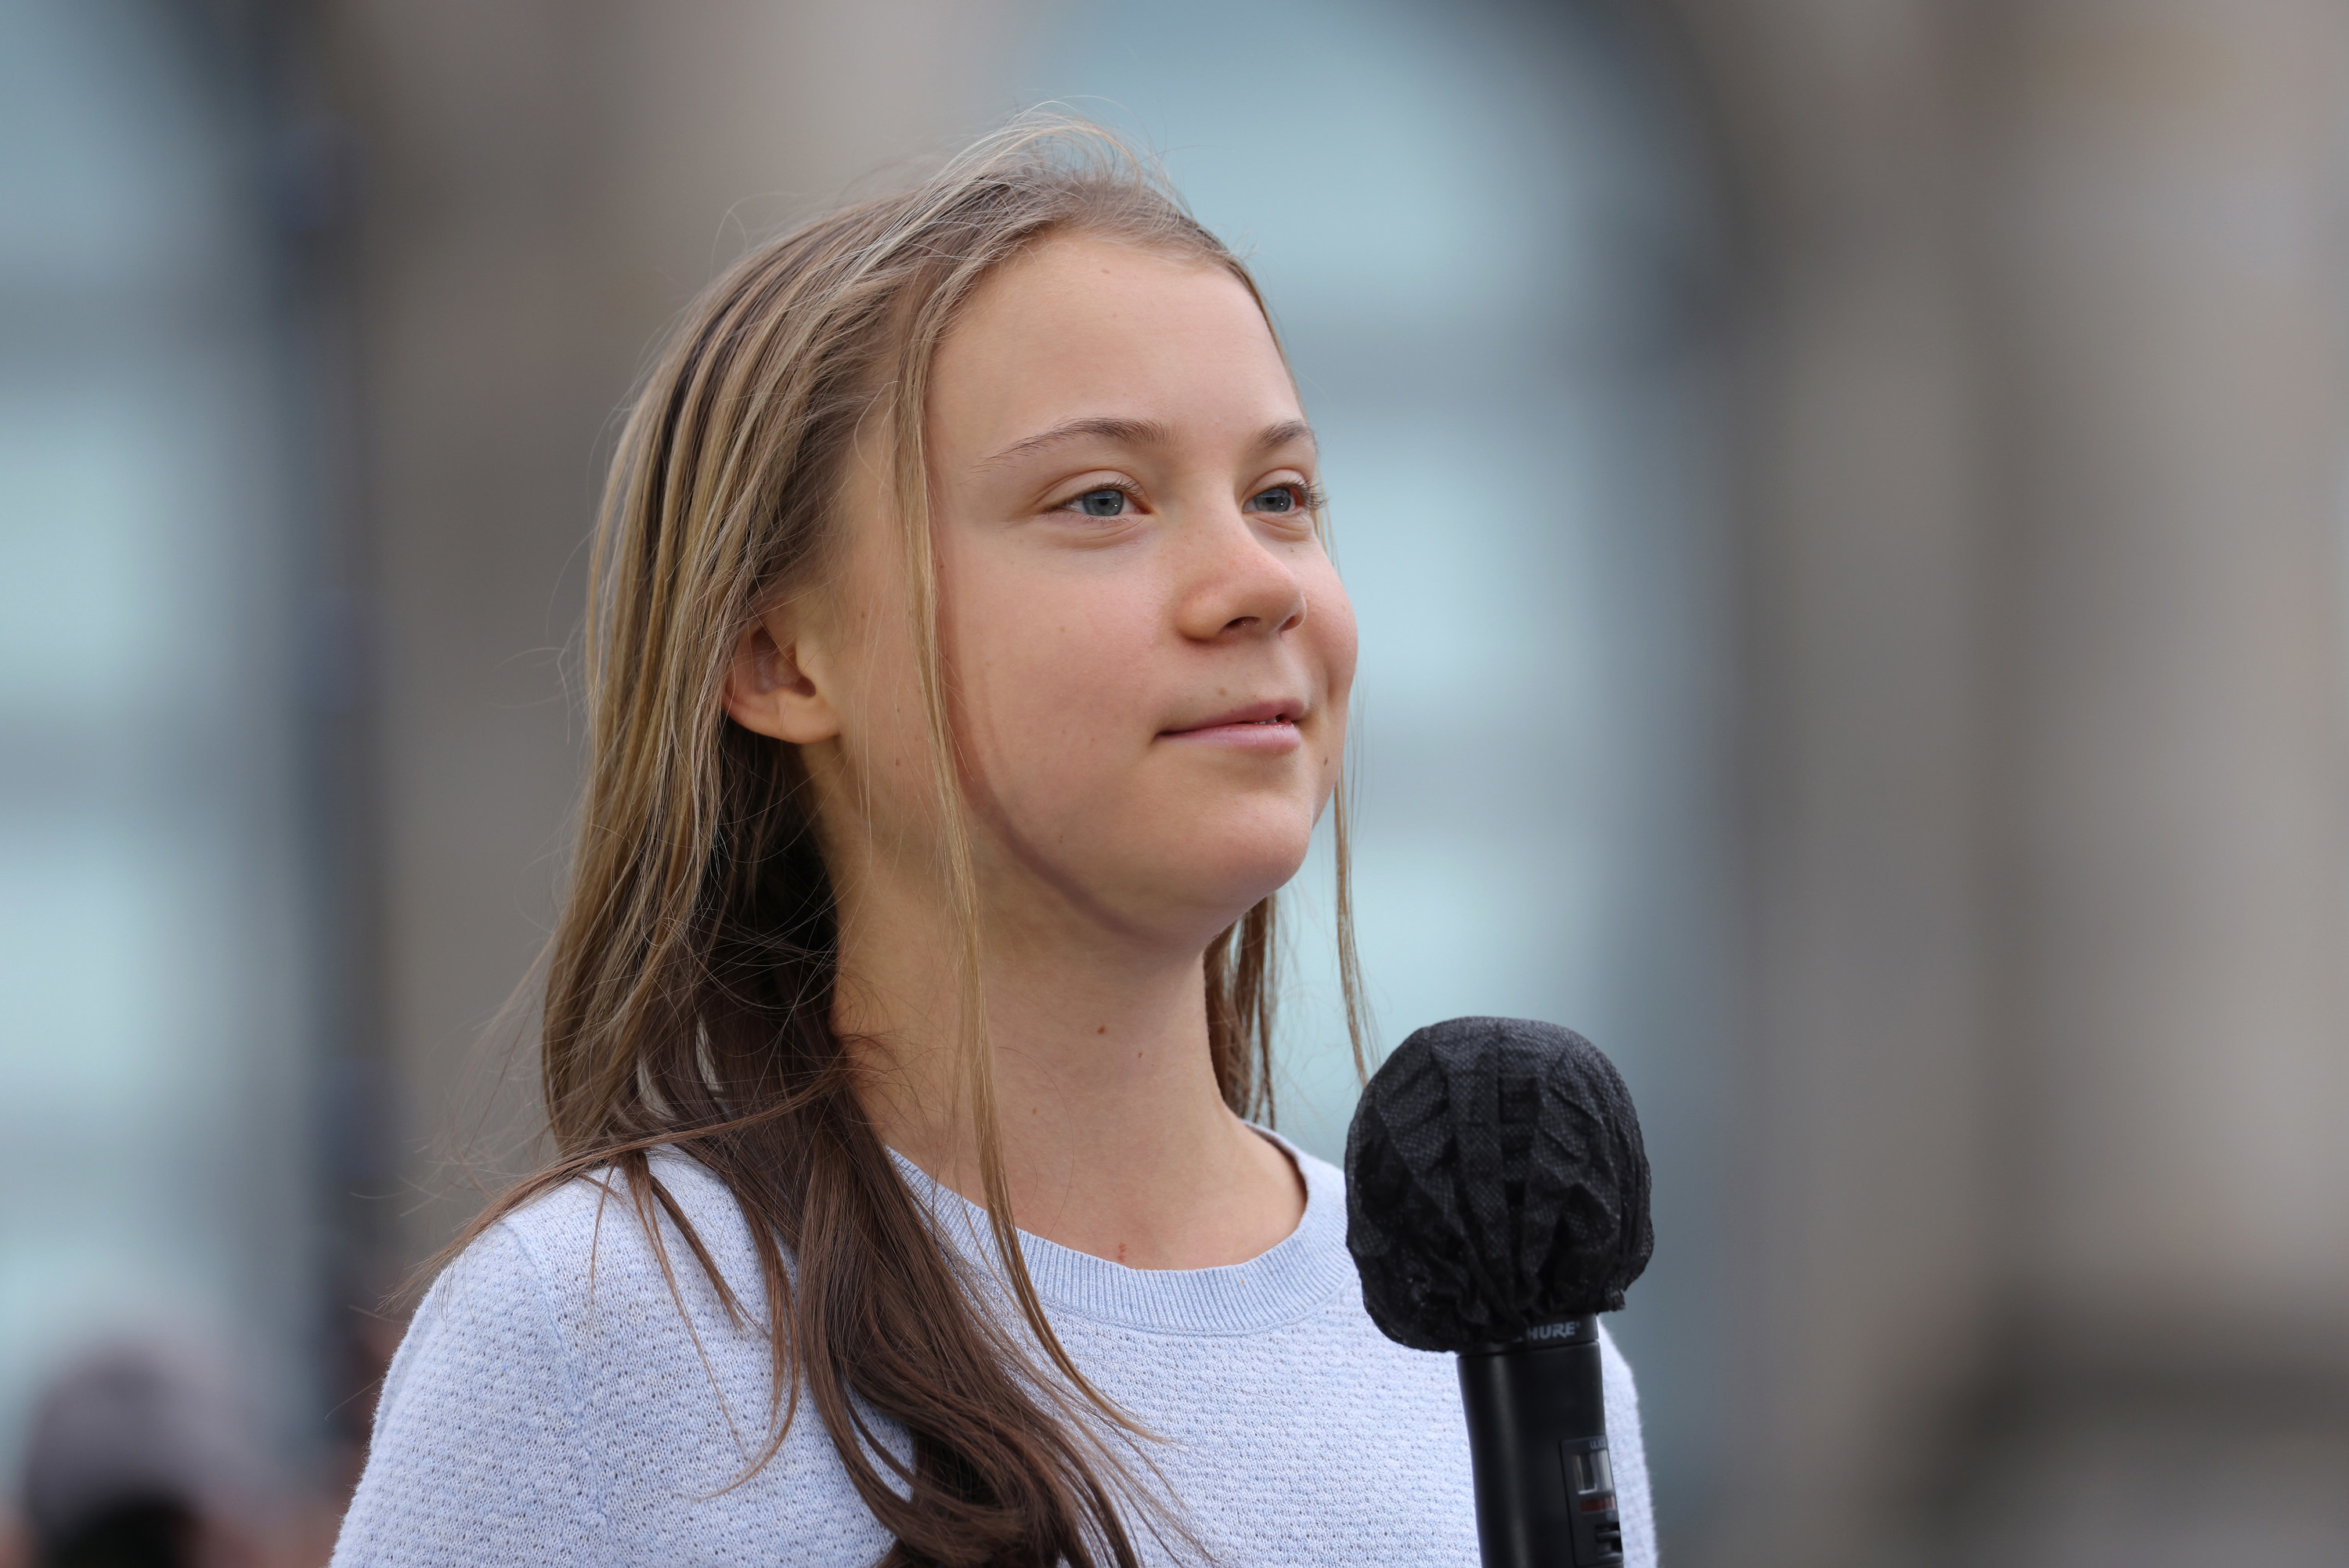 Greta at a microphone